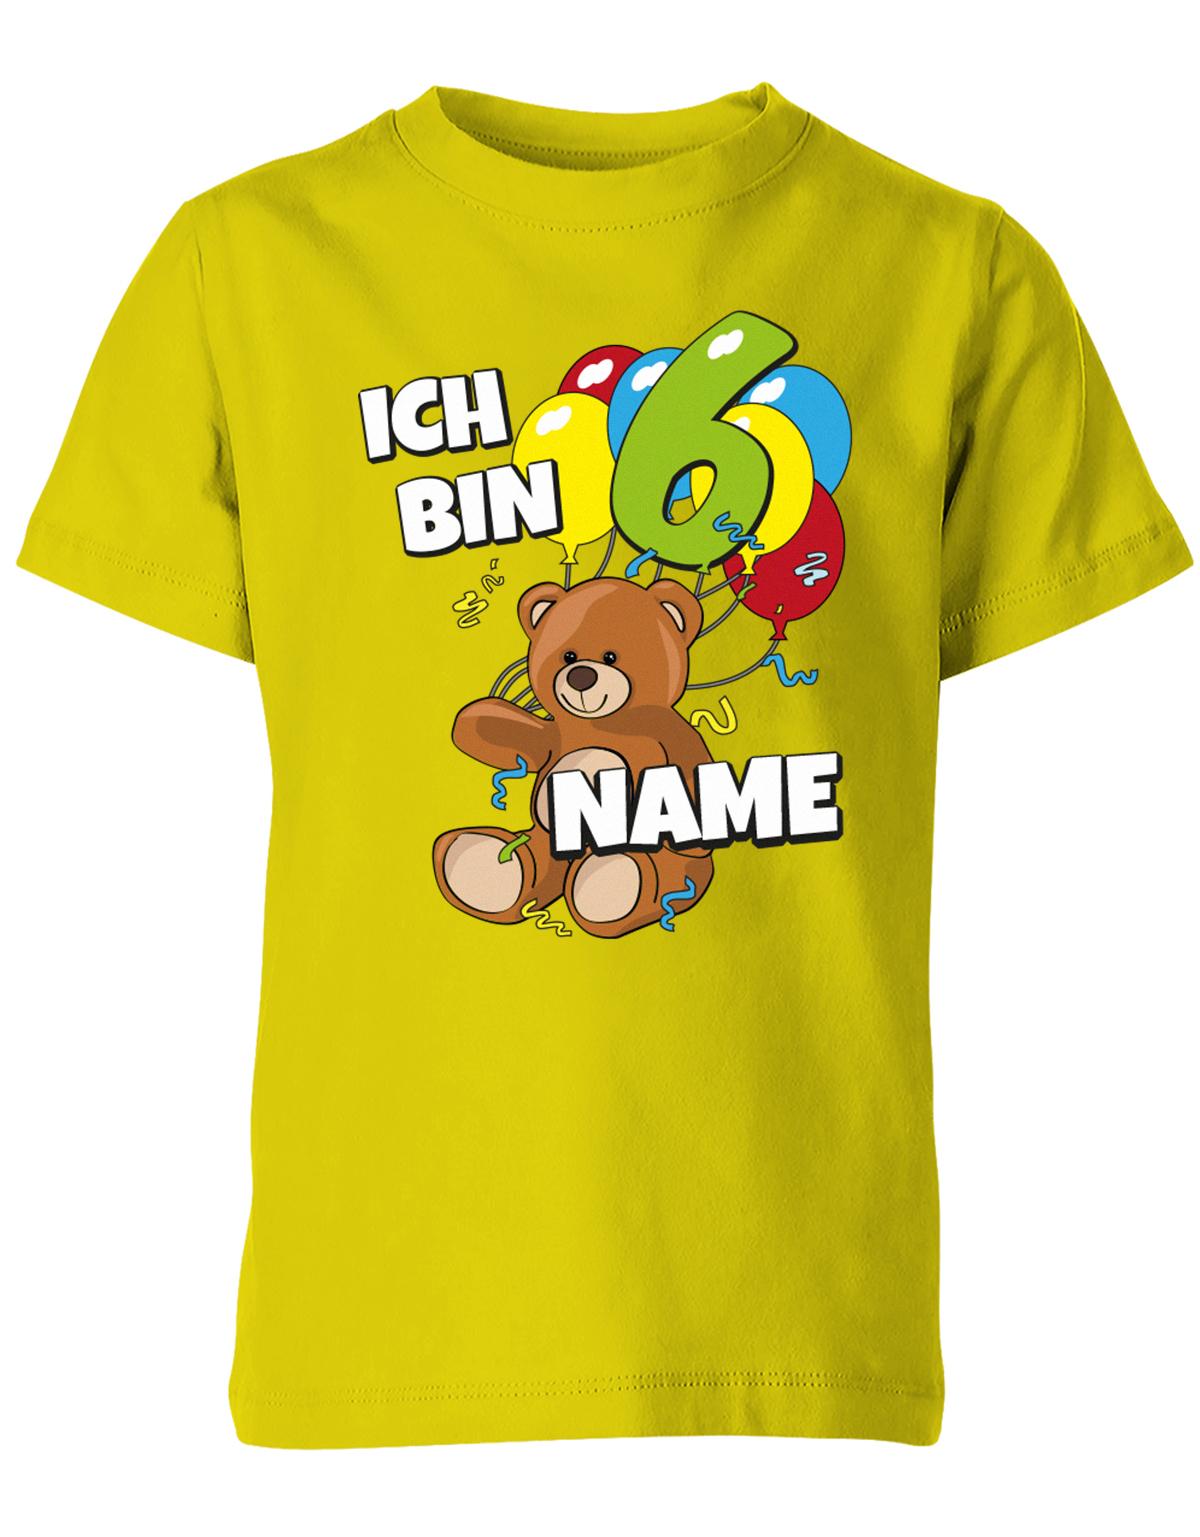 ich-bin-6-teddy-luftballons-kinder-shirt-gelb